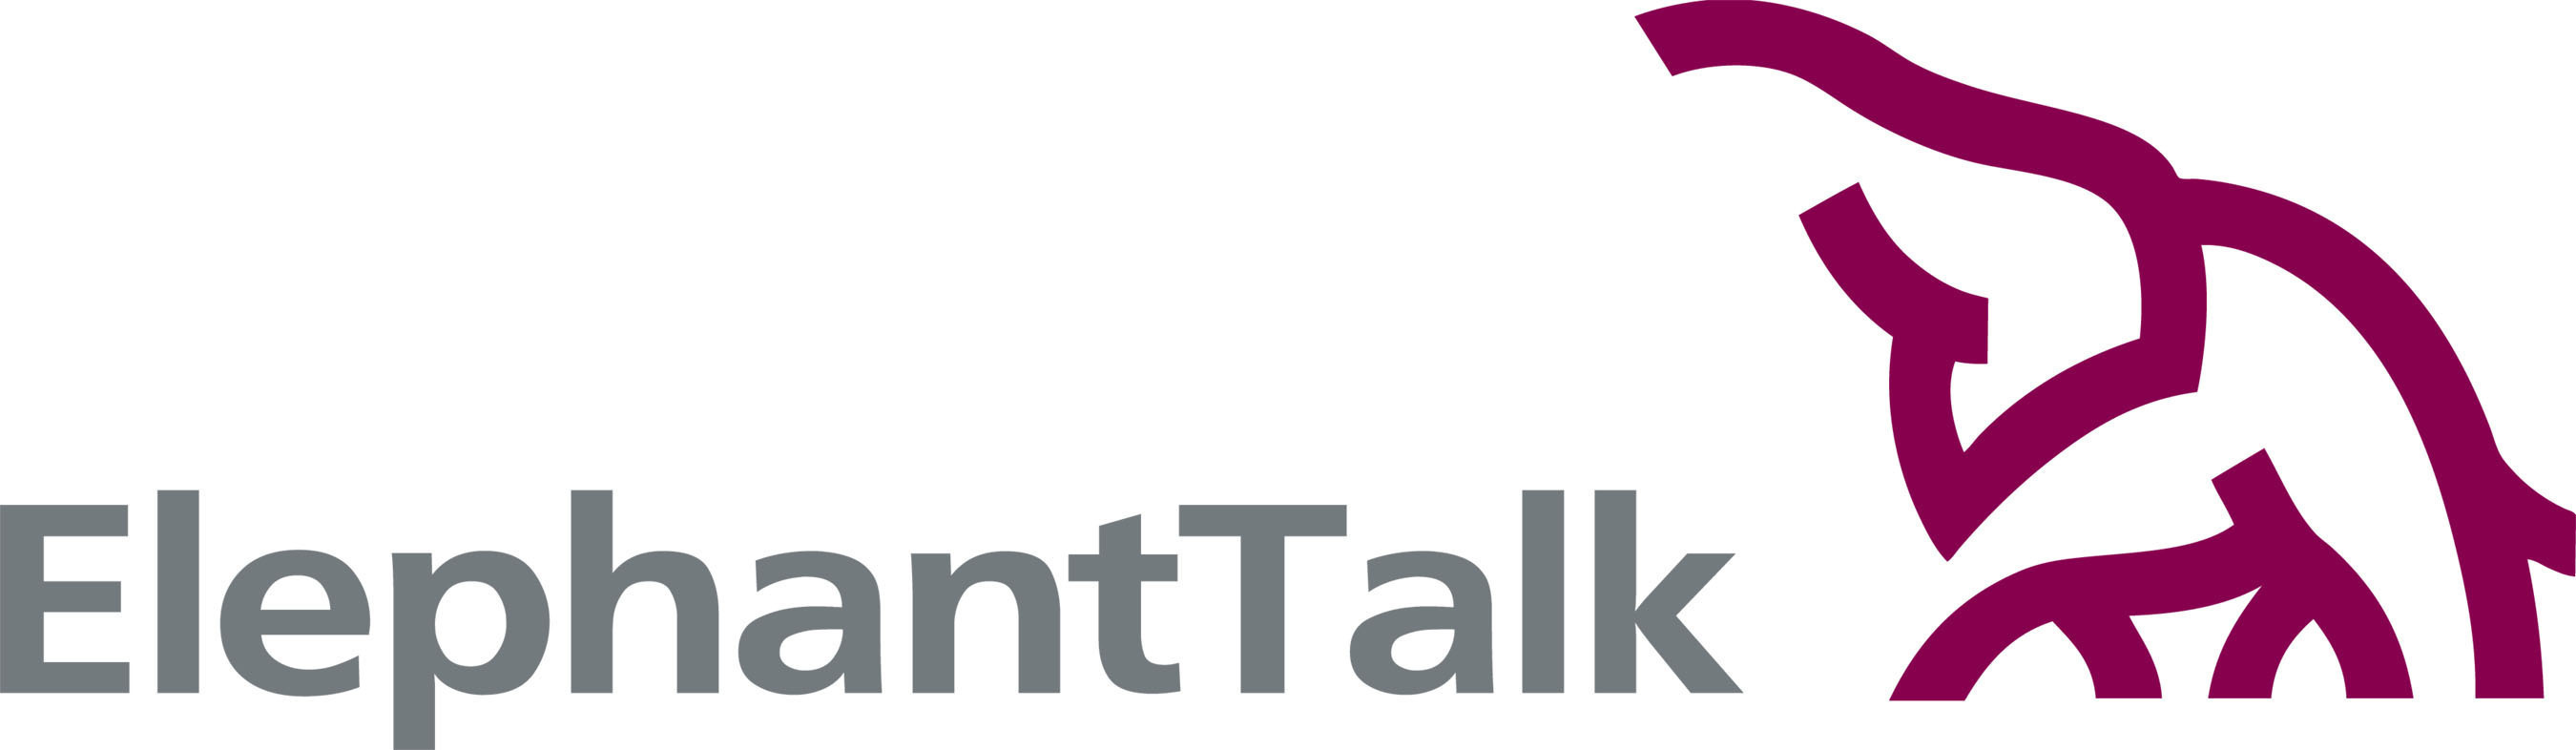 Elephant Talk Communications' Logo.